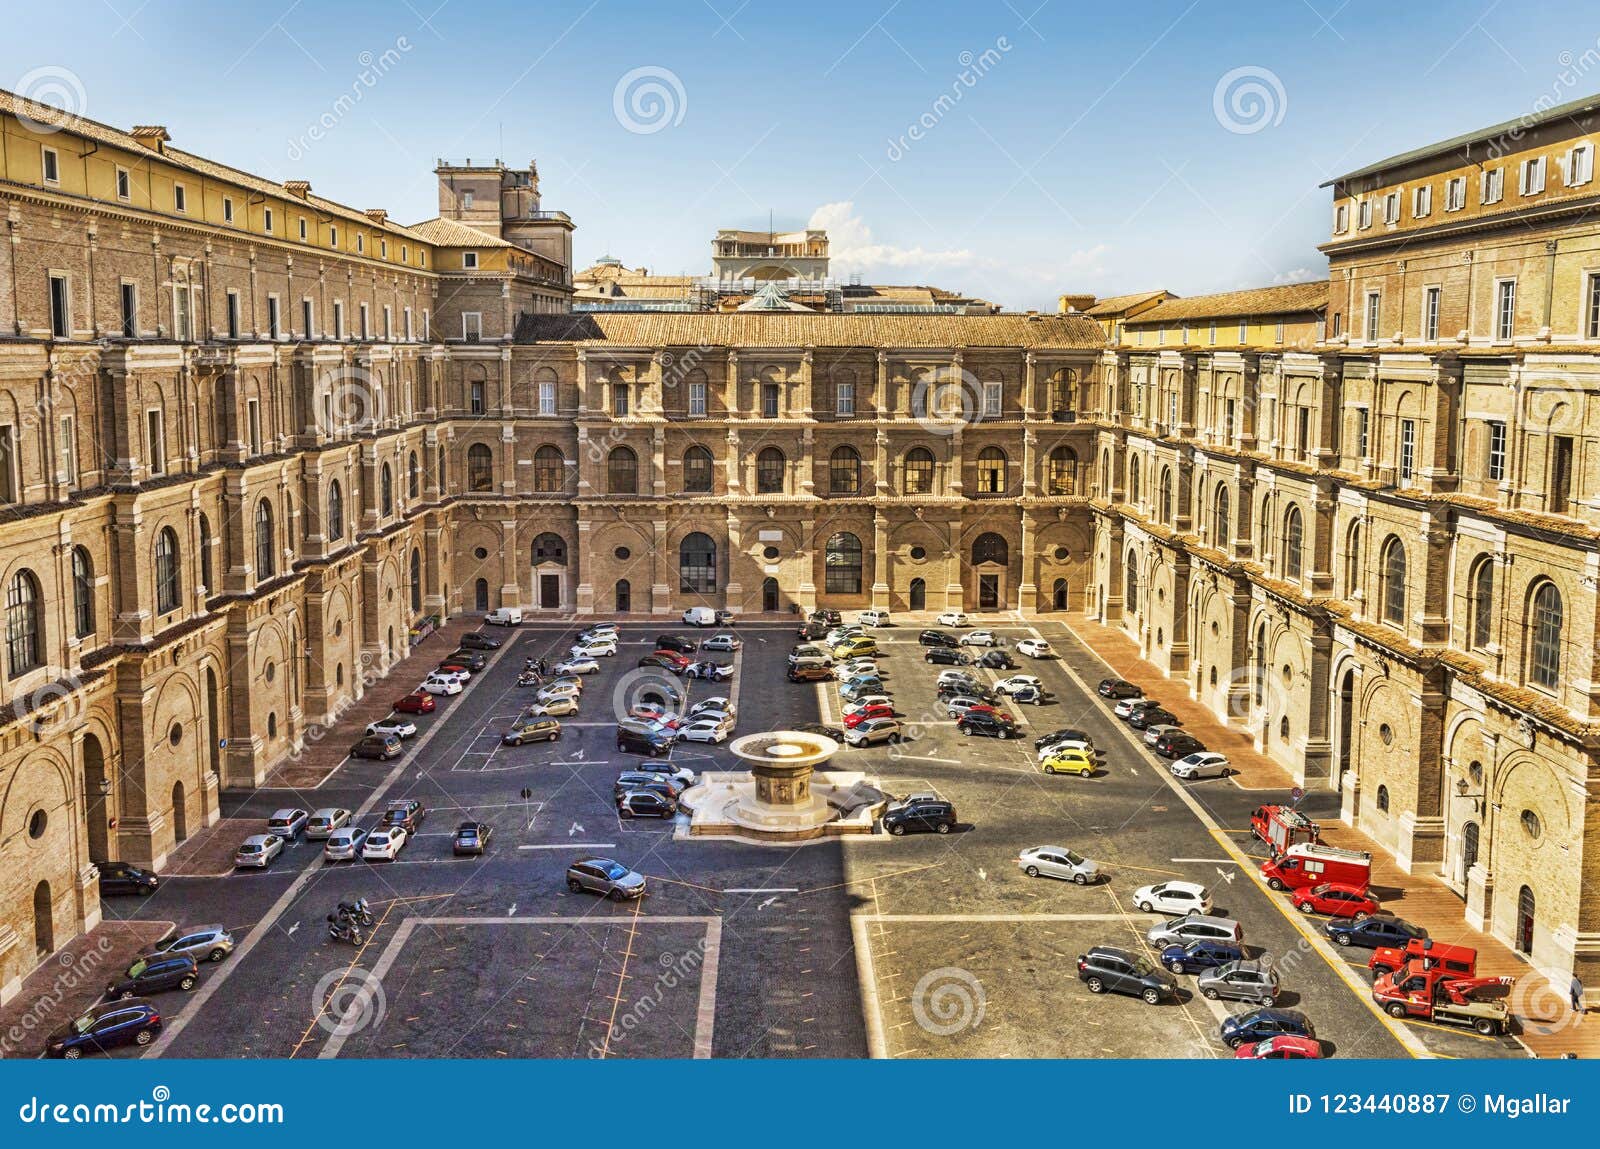 Belvedere Courtyard in the Vatican City - Vatican State Editorial